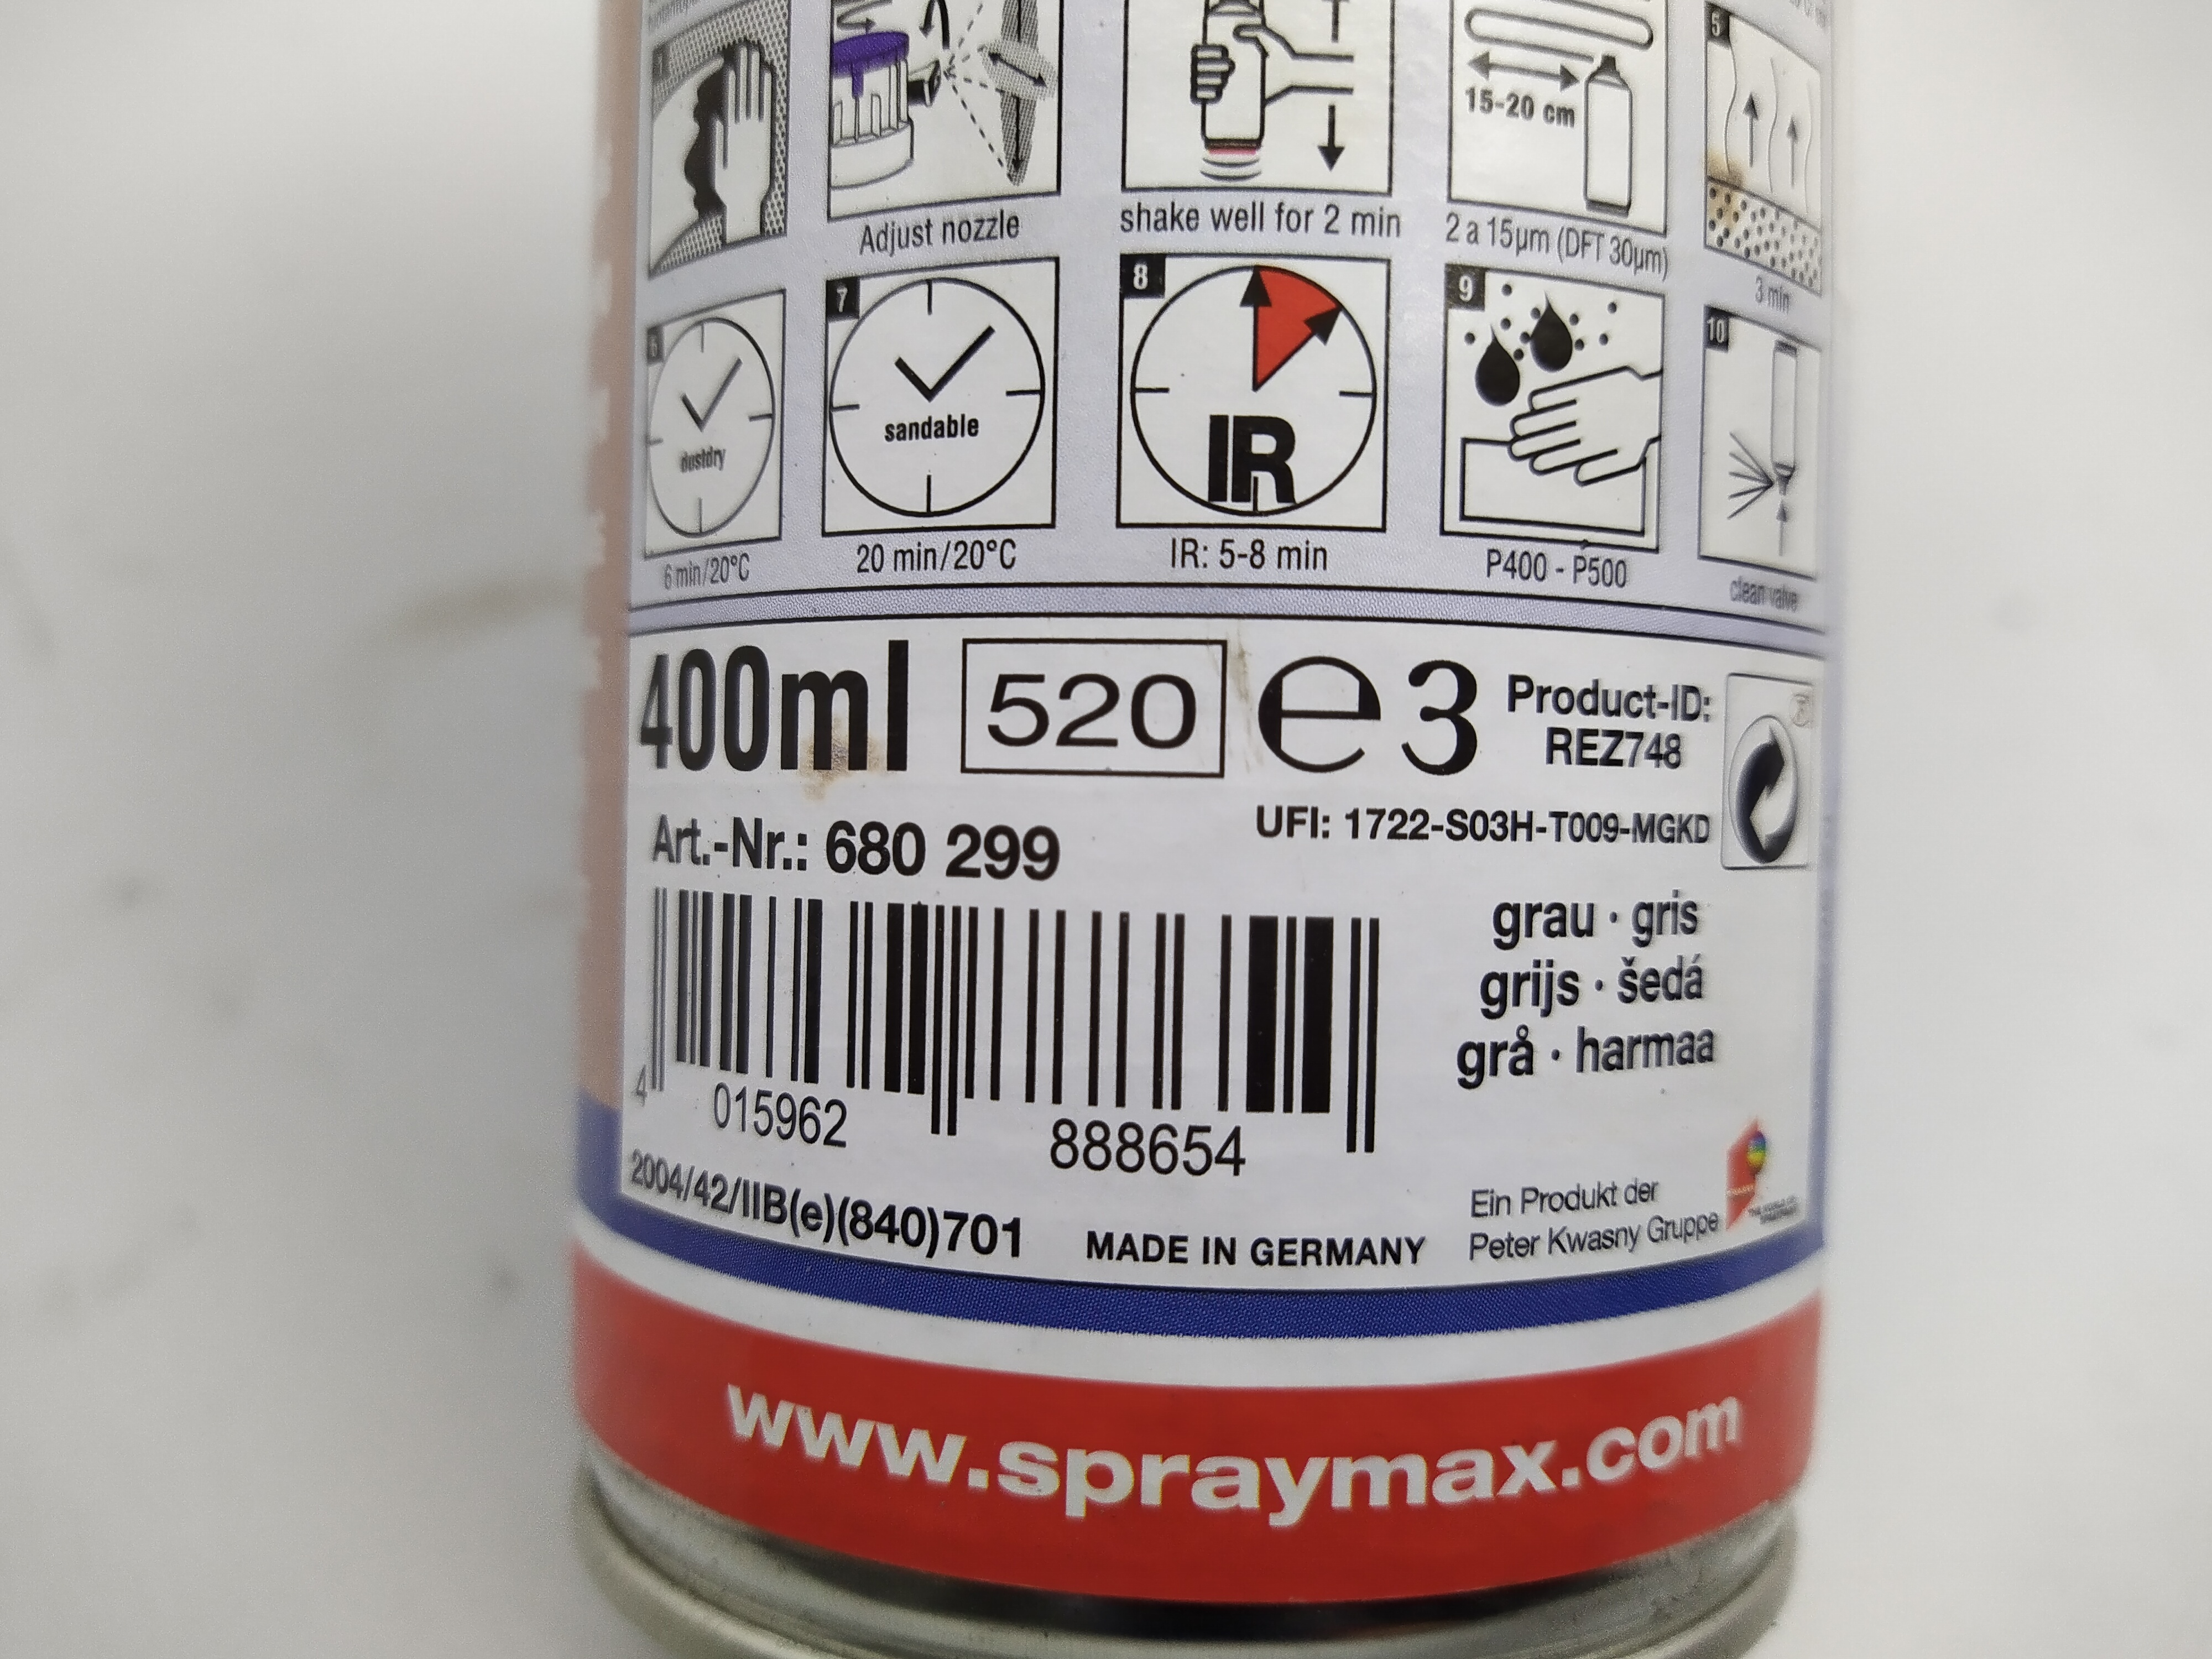 SPRAY MAX 1K RAPID EPOXY GRUNDIERUNG grau 400ml Spray